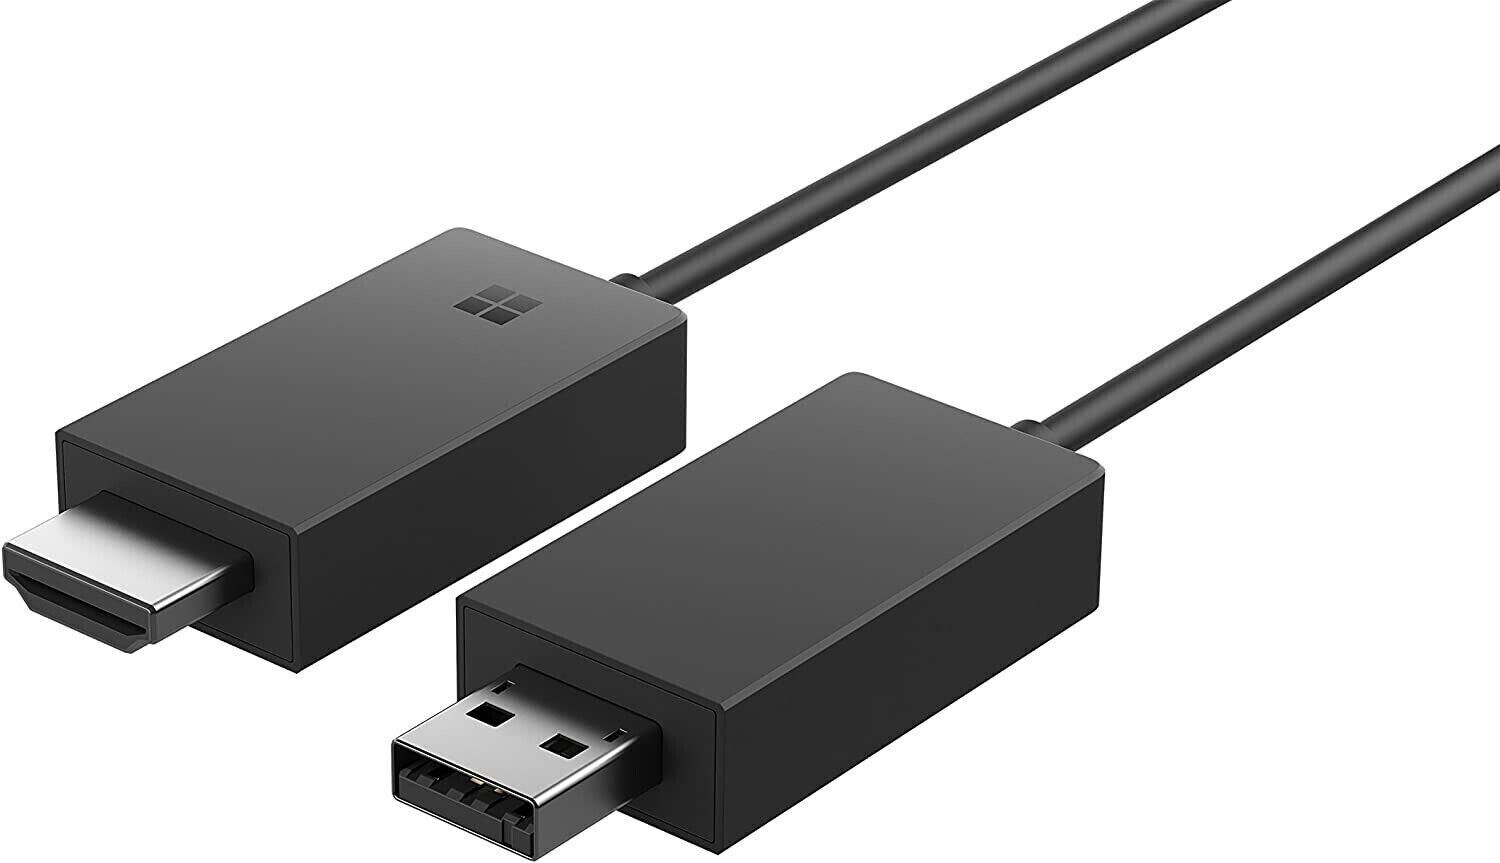 Microsoft Wireless V2 Display Adapter - USB/HDMI Display Adapter